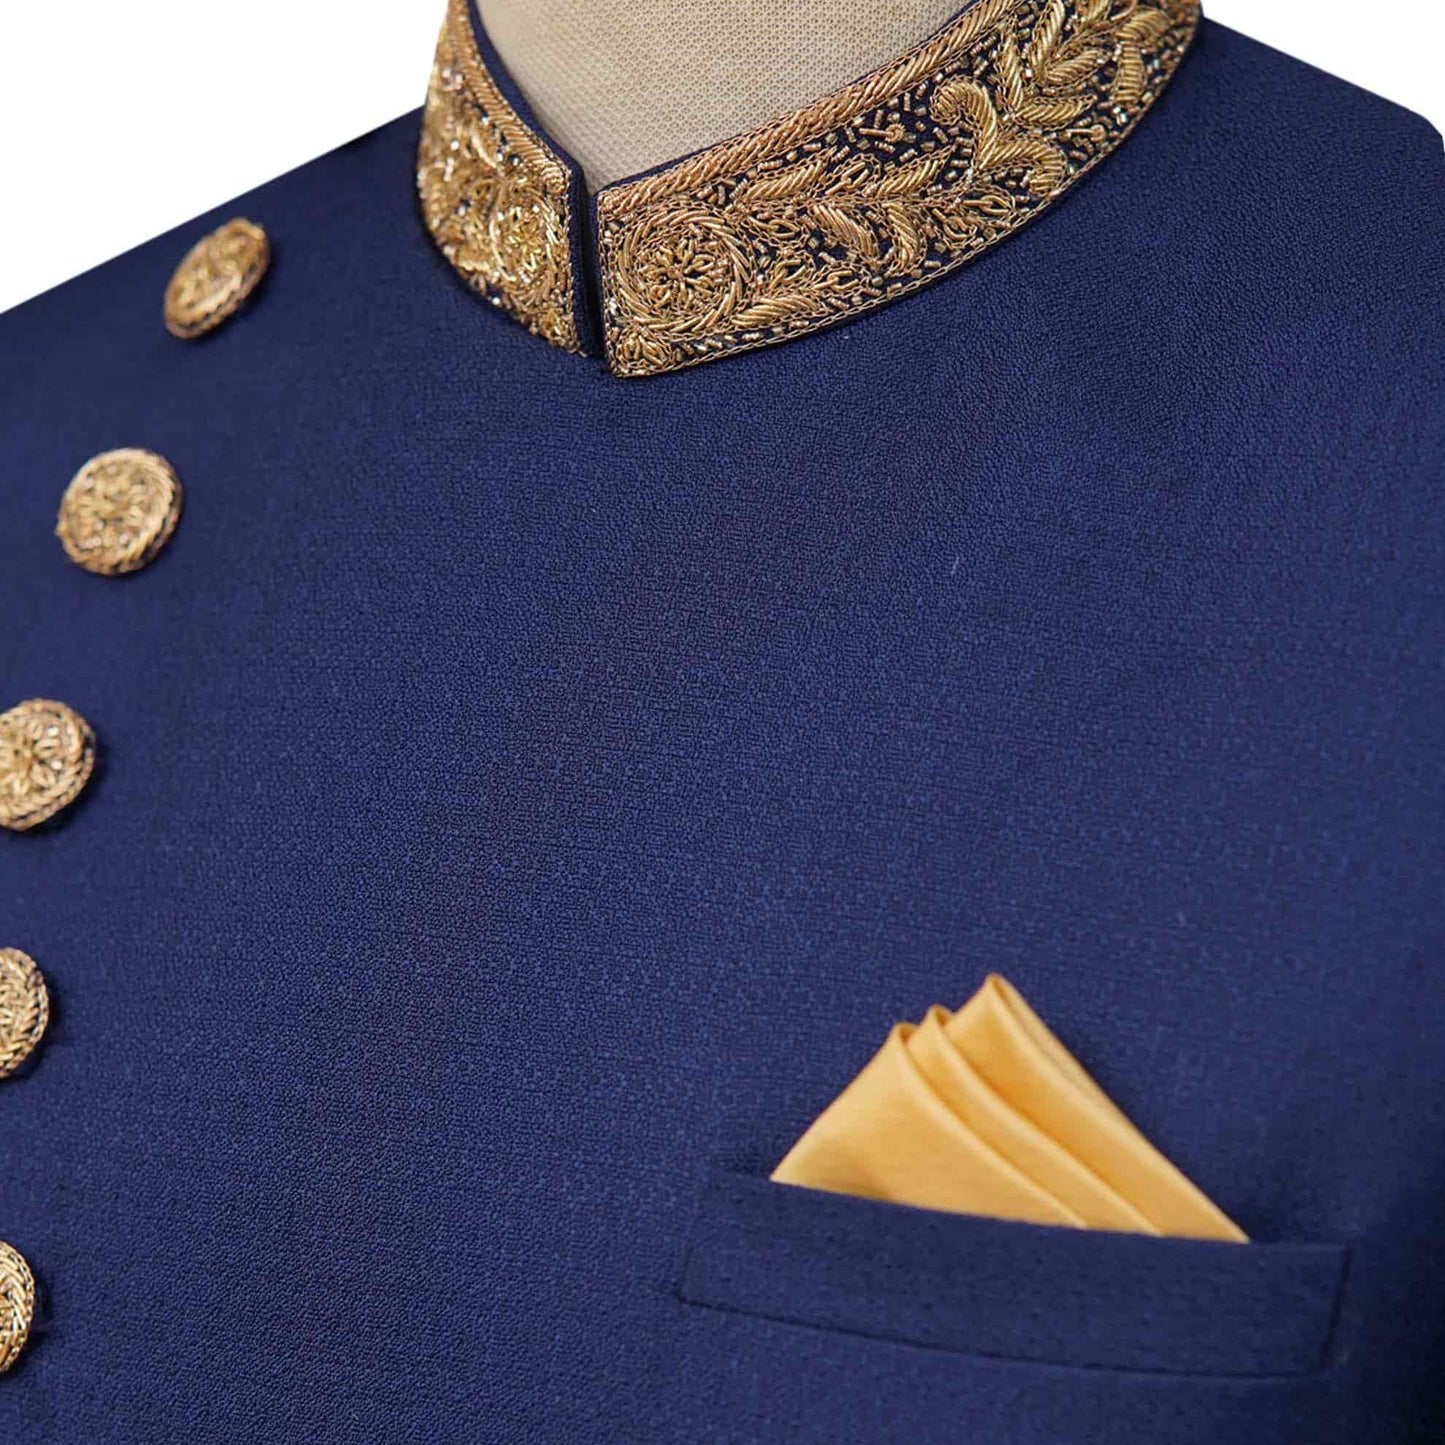 
                  
                    Luxurious golden embellished prince coat self designed with pocket square and embellished collar| Navy blue prince coat for groom 4
                  
                